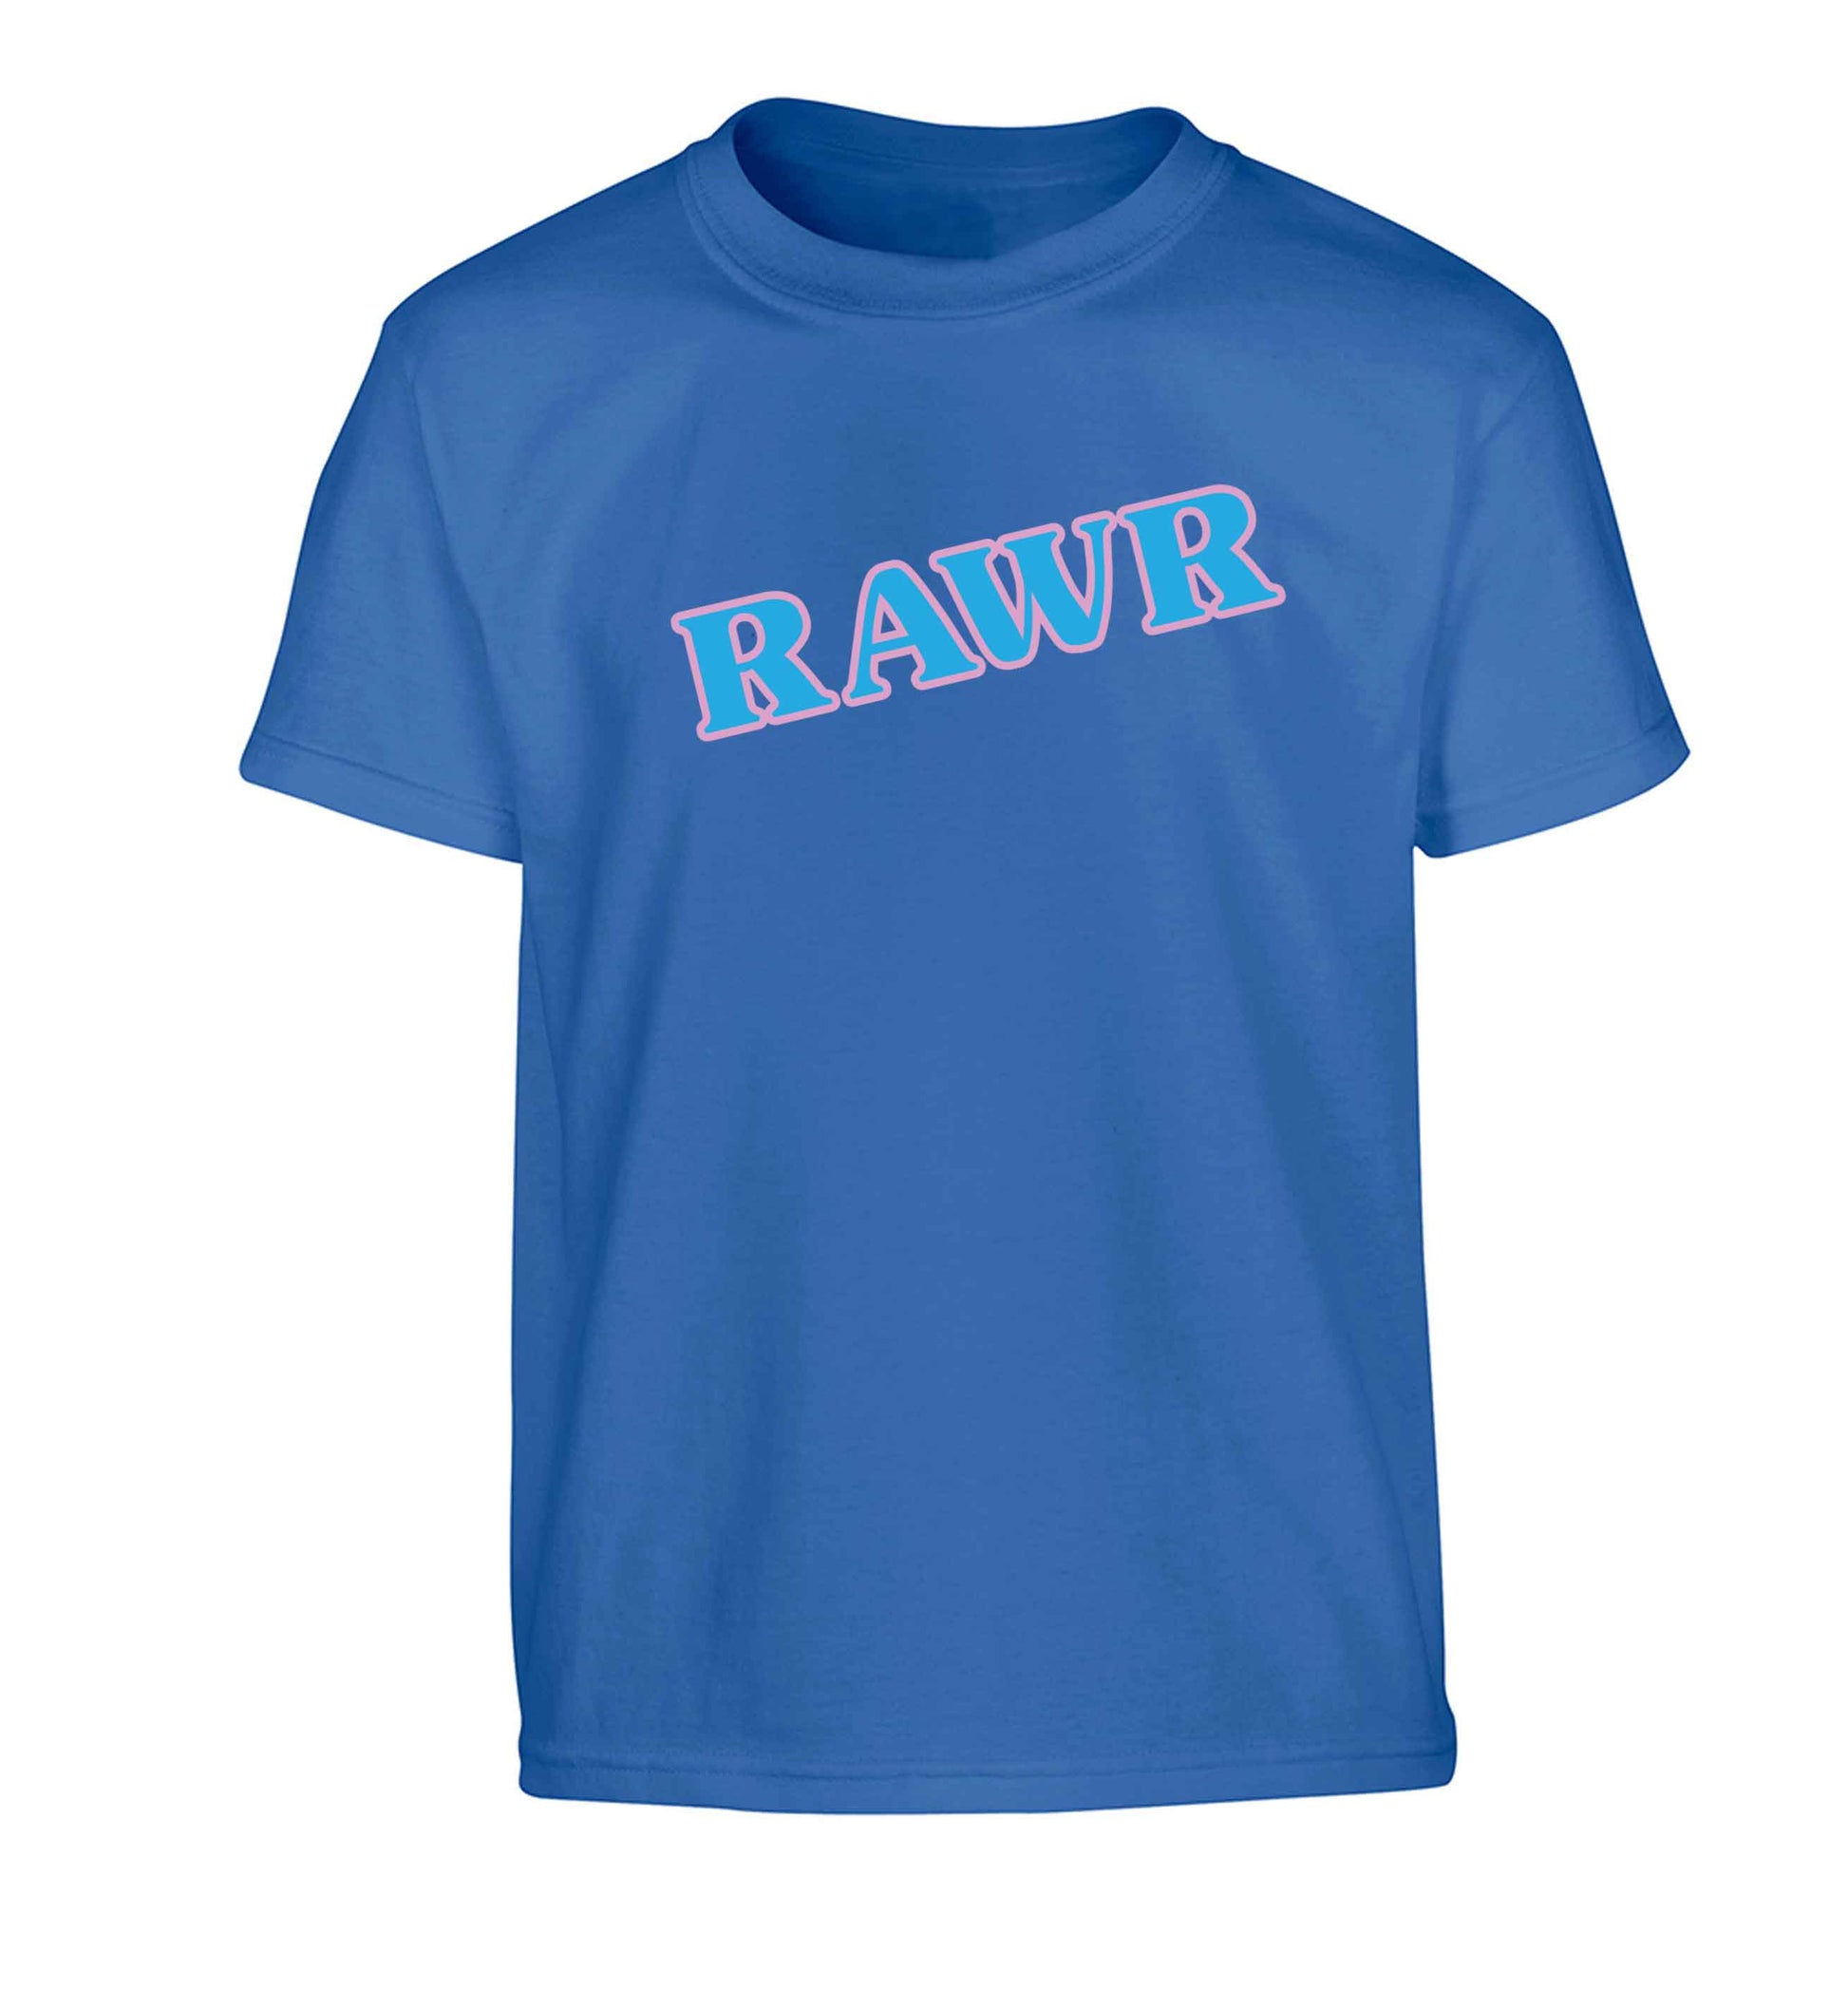 Rawr Children's blue Tshirt 12-13 Years